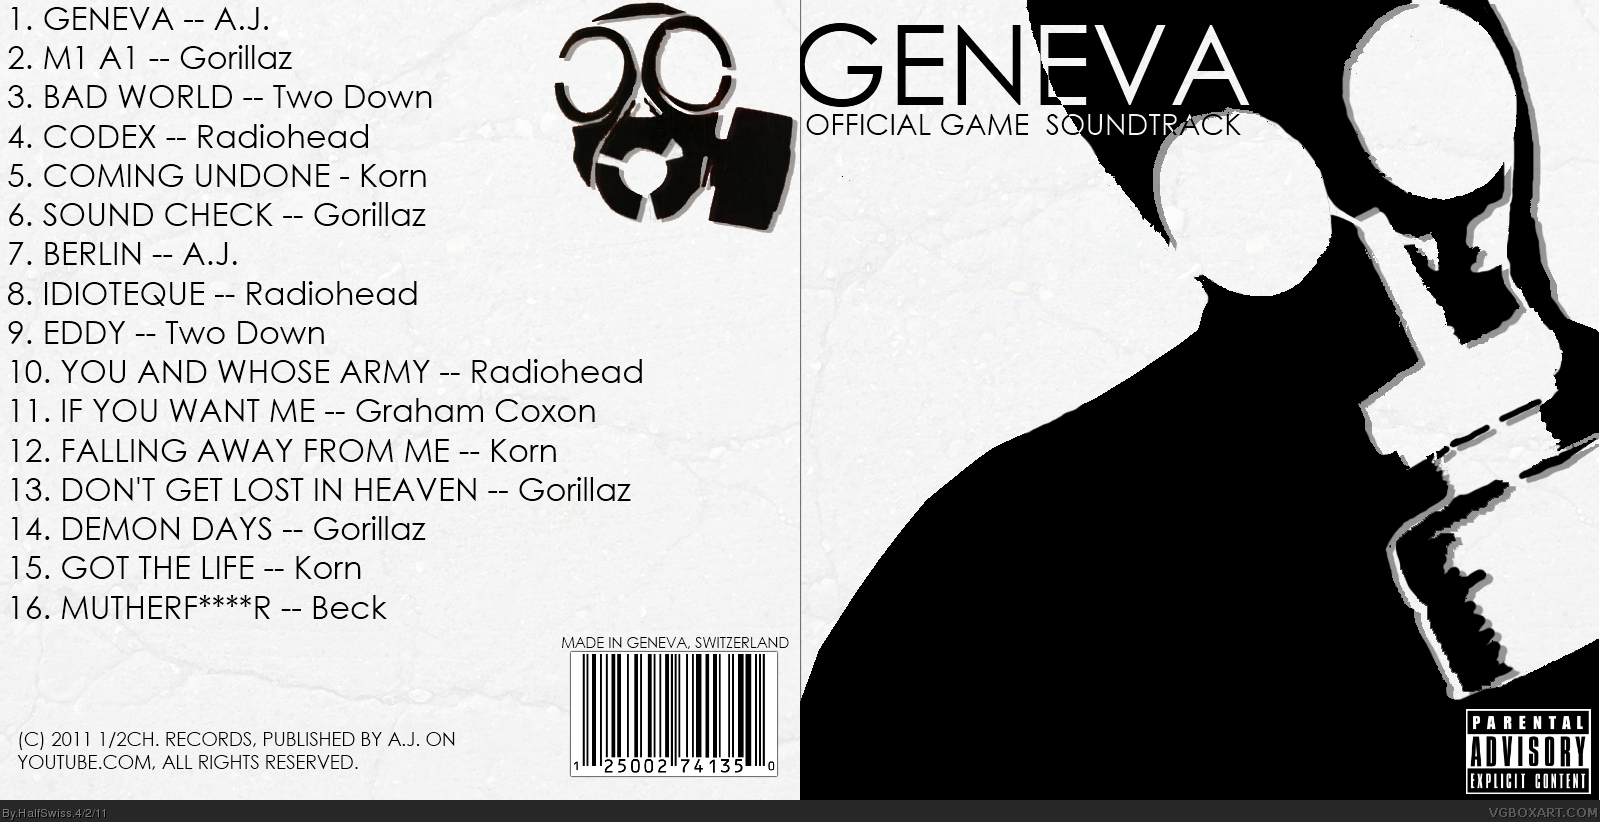 Geneva: Official Game Soundtrack box cover